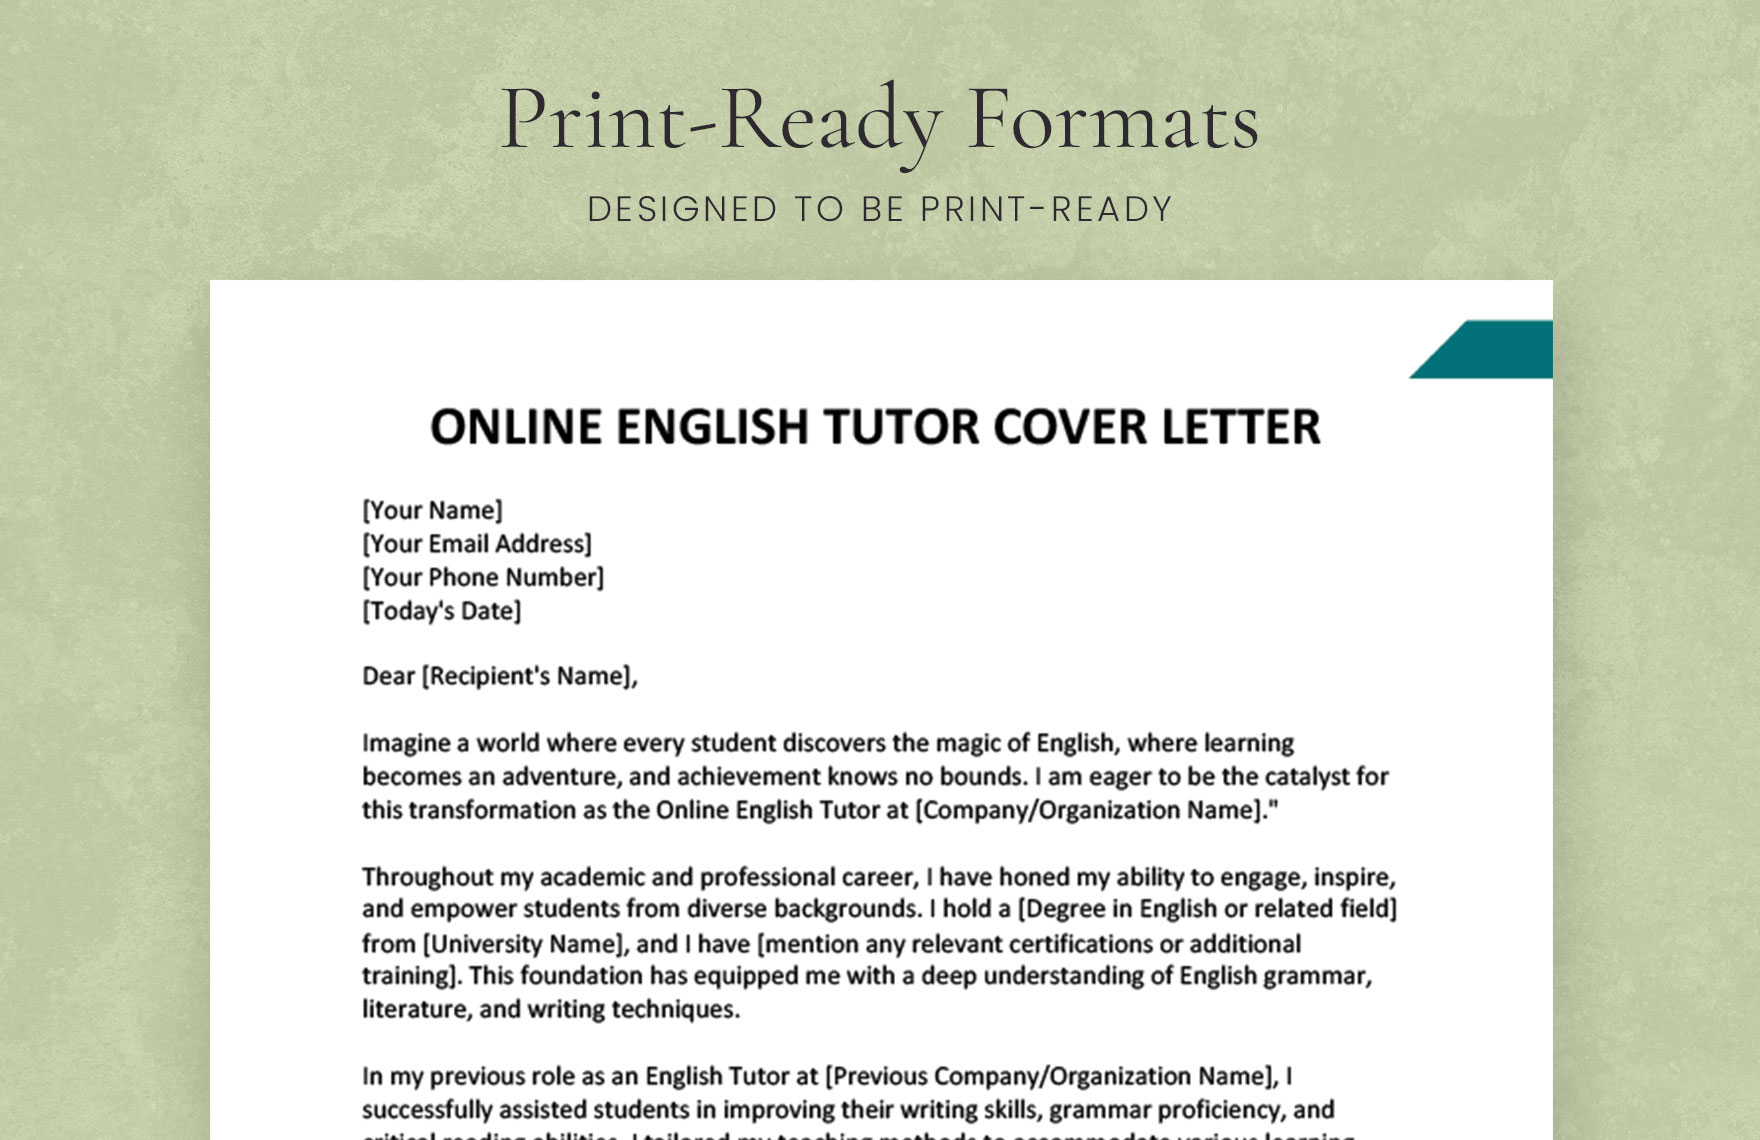 Online English Tutor Cover Letter